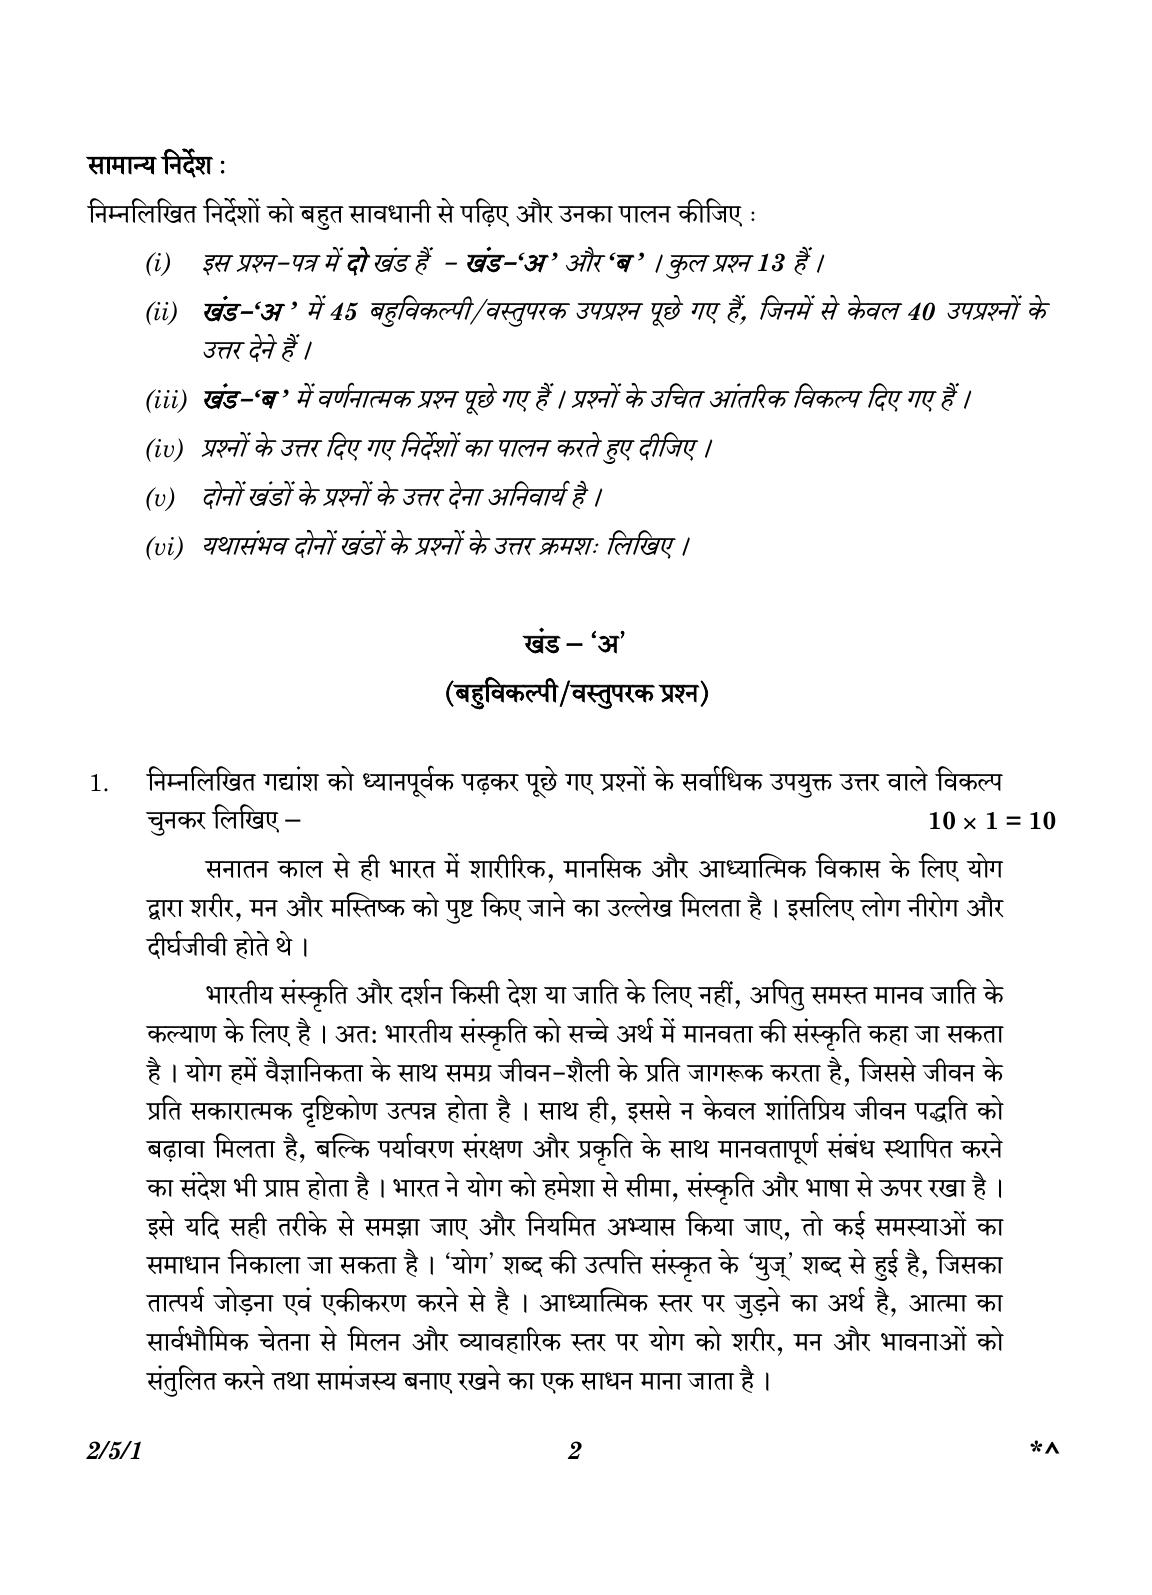 CBSE Class 12 2-5-1 Hindi Core version 2023 Question Paper - Page 2